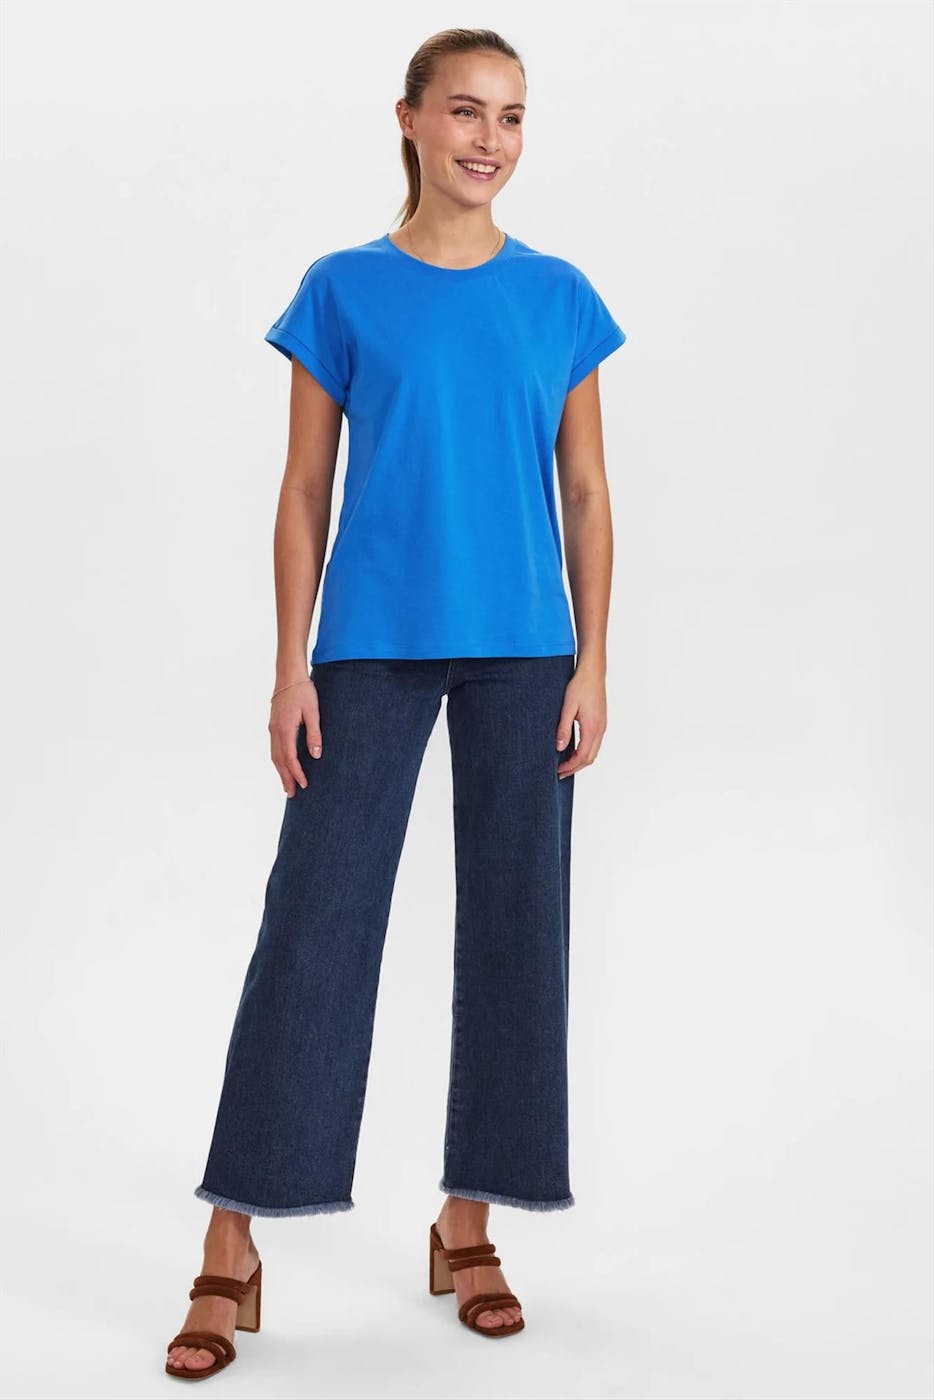 Nümph - Blauwe Beverly T-shirt